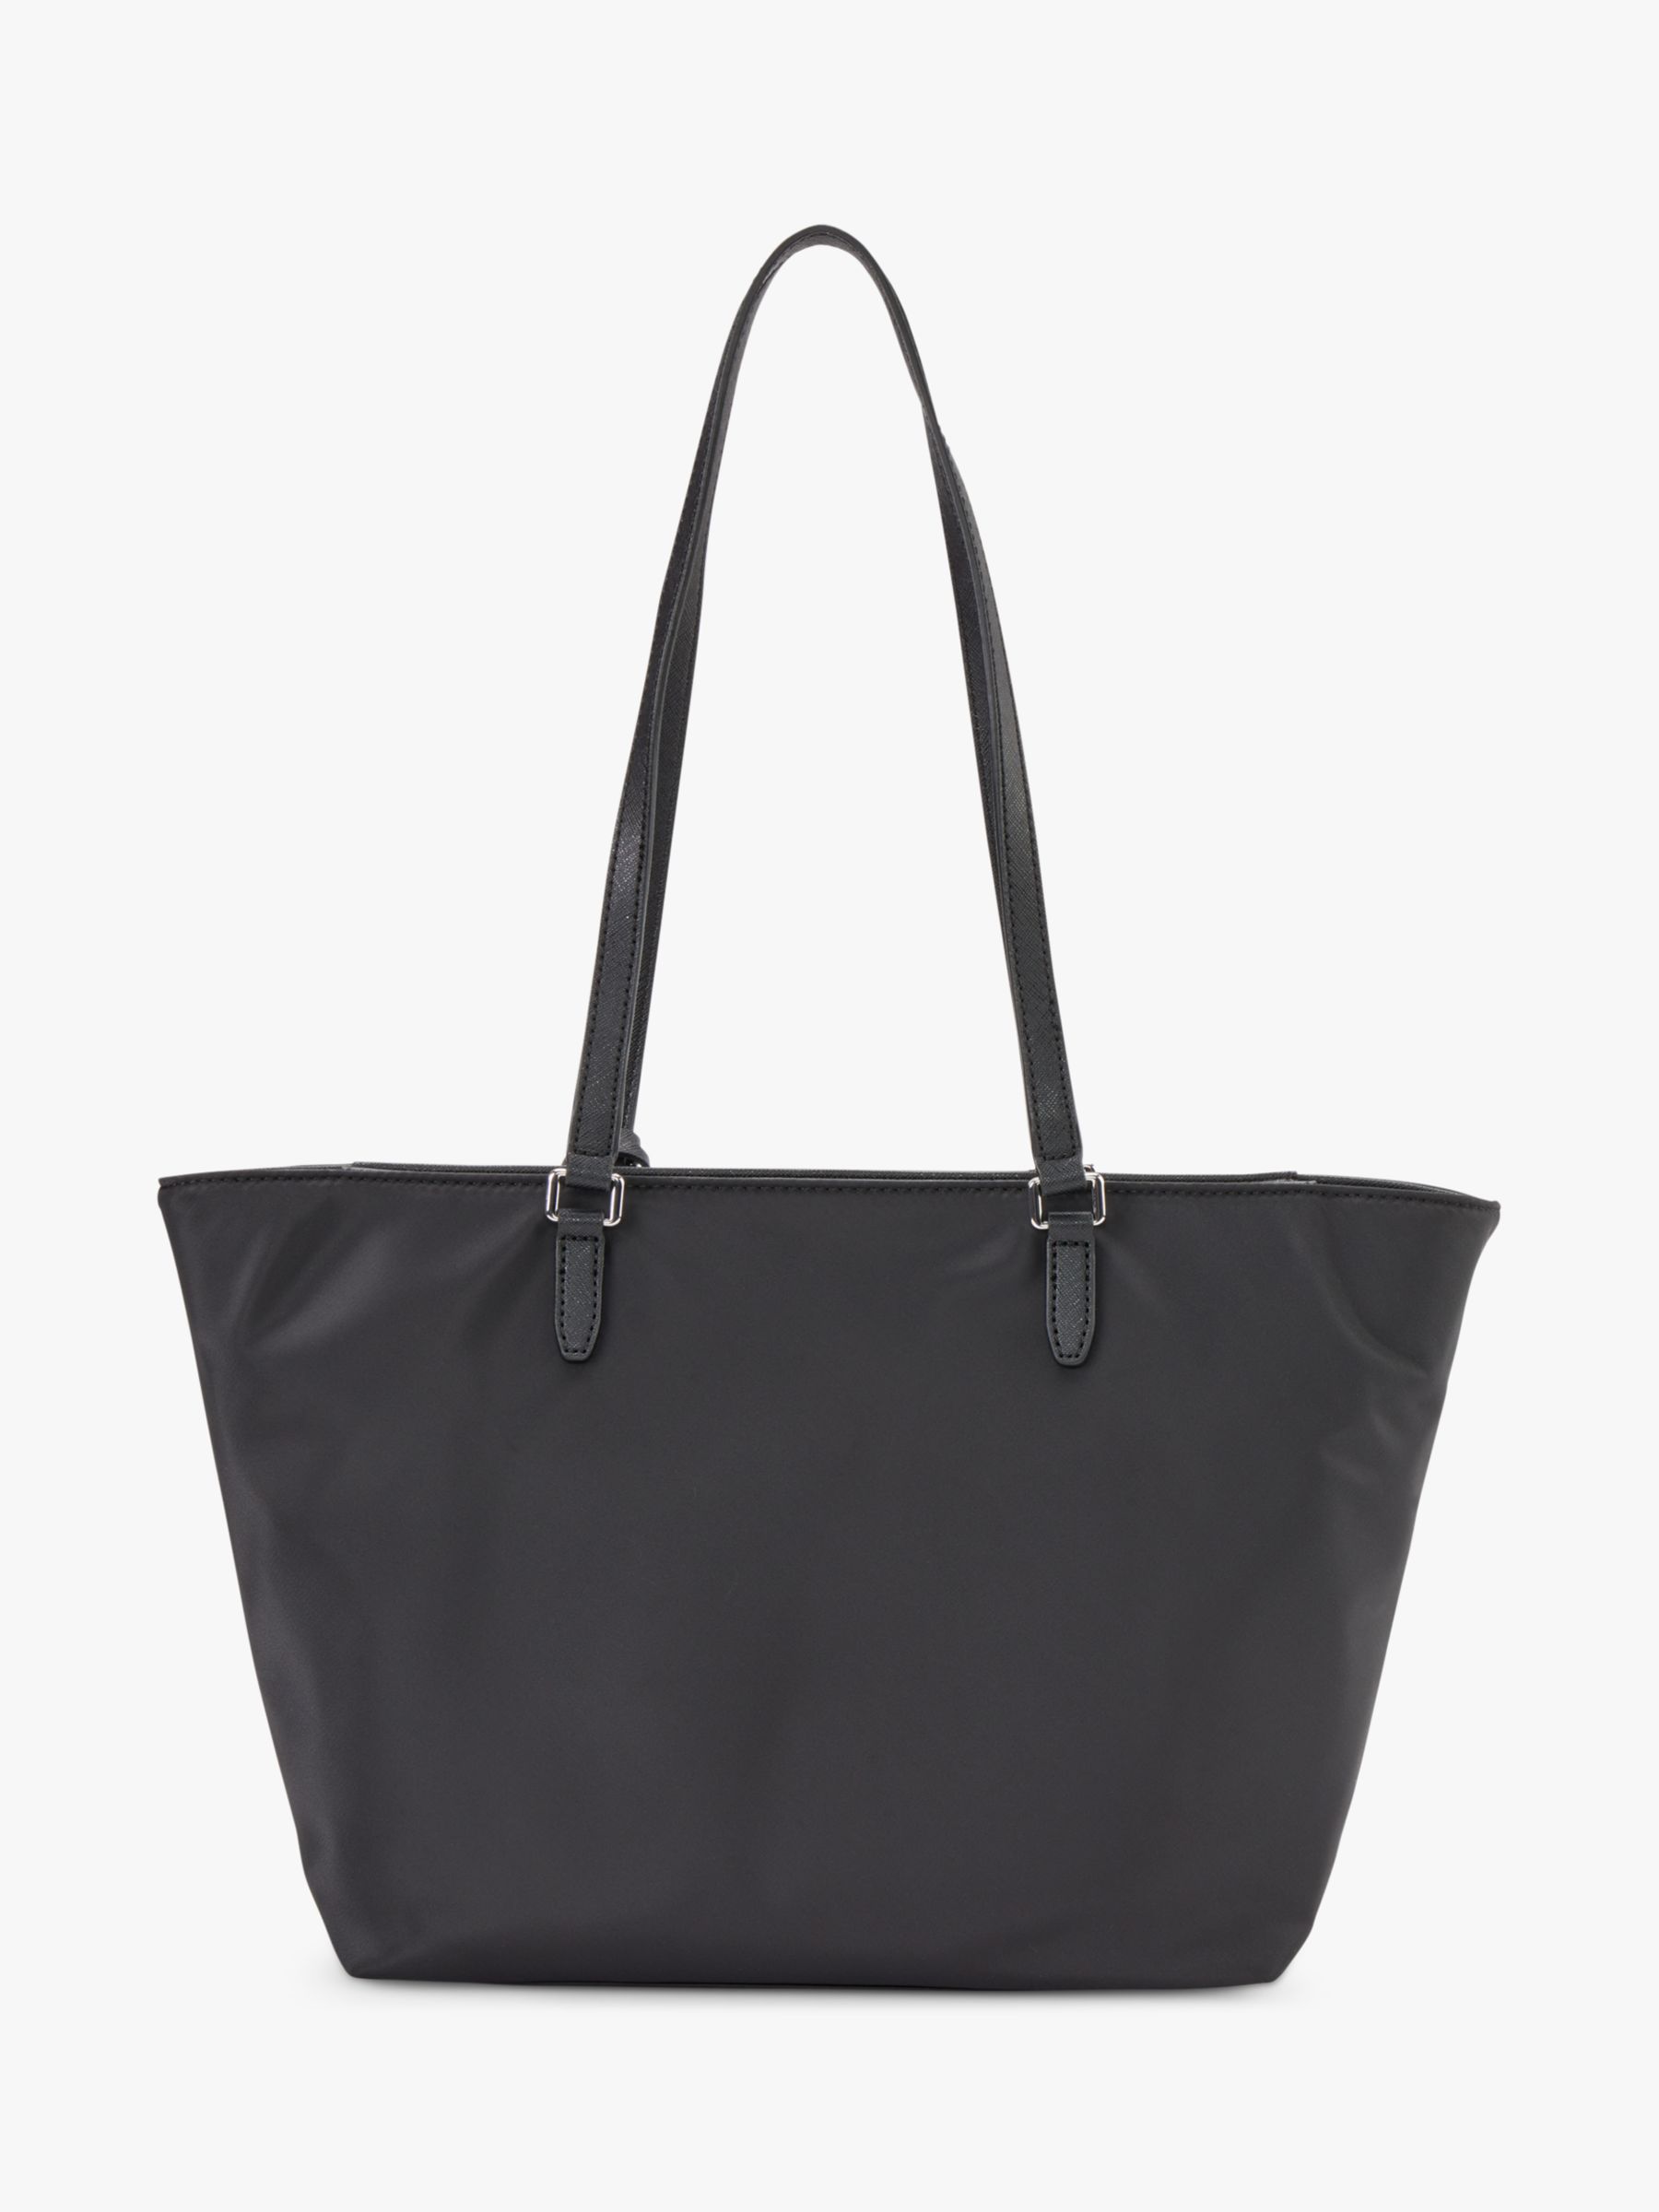 DKNY, DKNY Carol Medium Tote Bag, Black/Gold Bgd